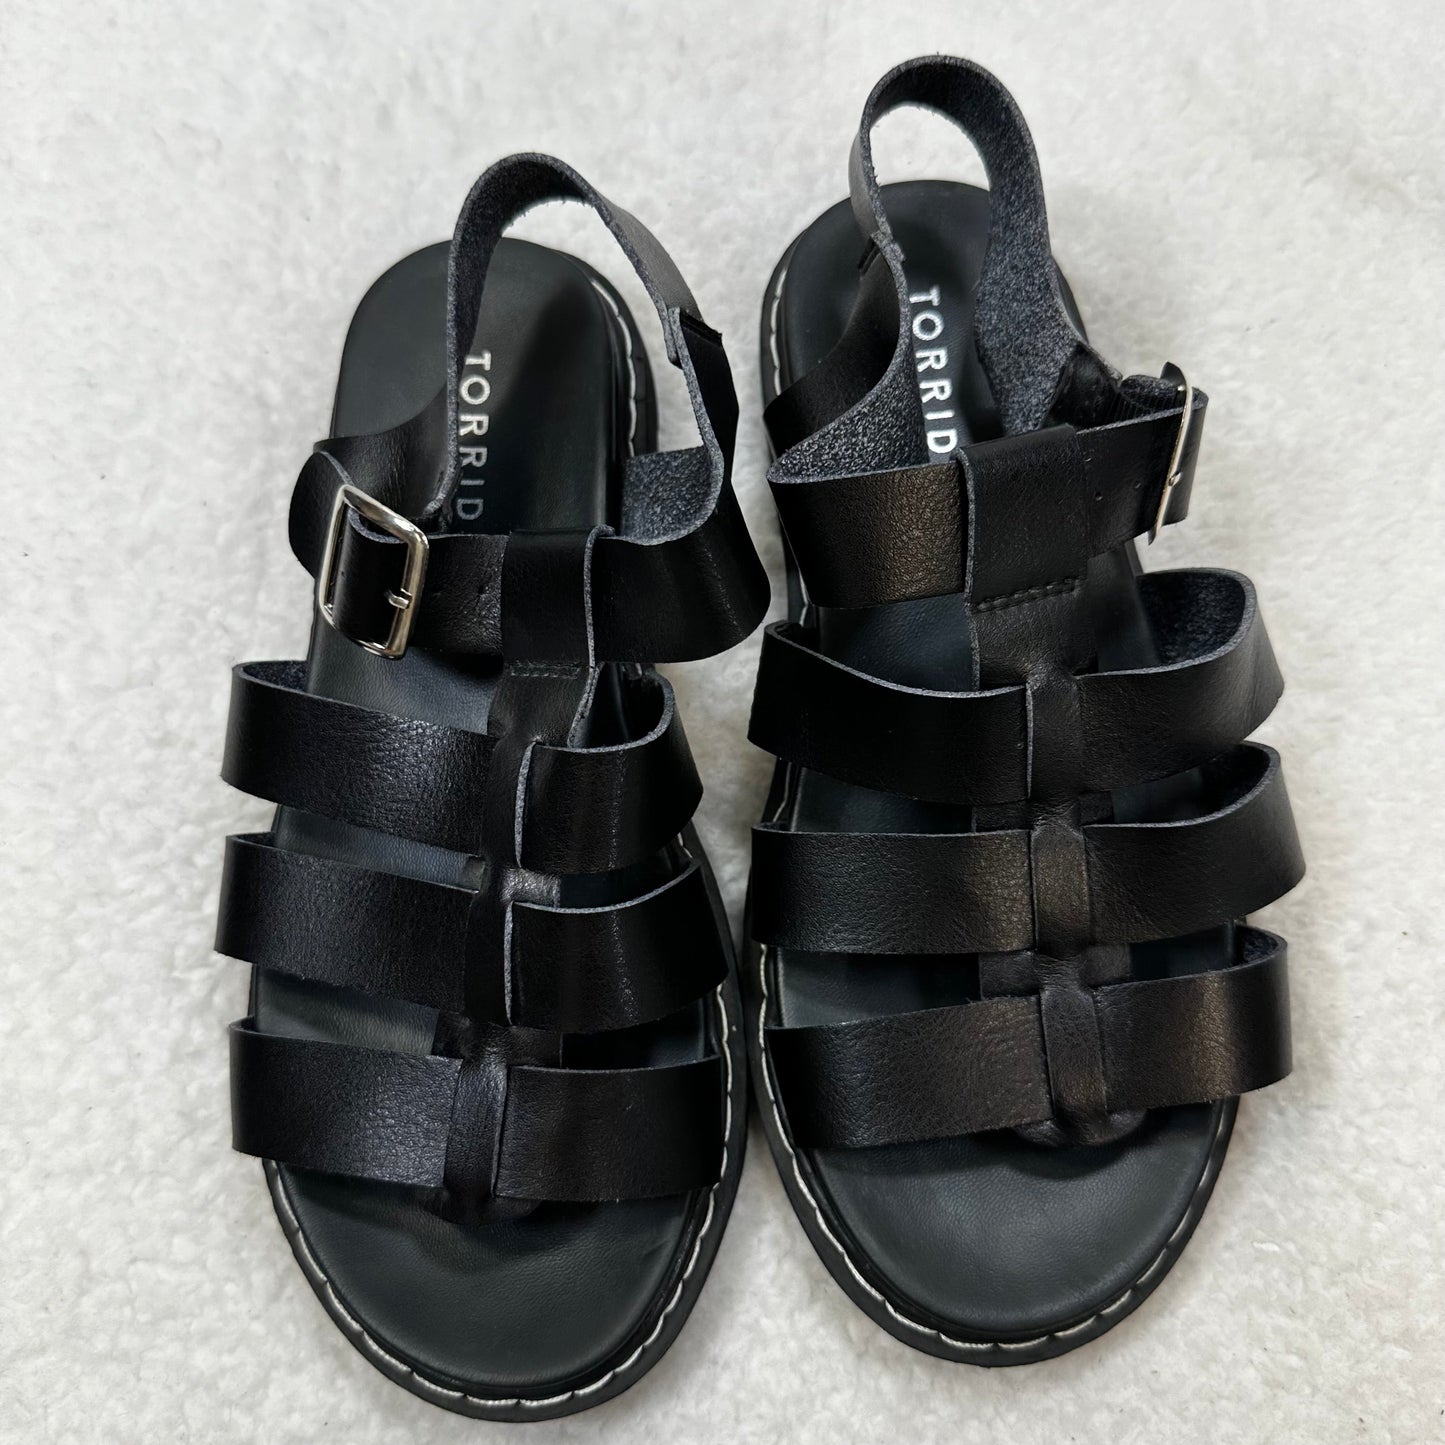 Black Sandals Flats Torrid, Size 8 wide